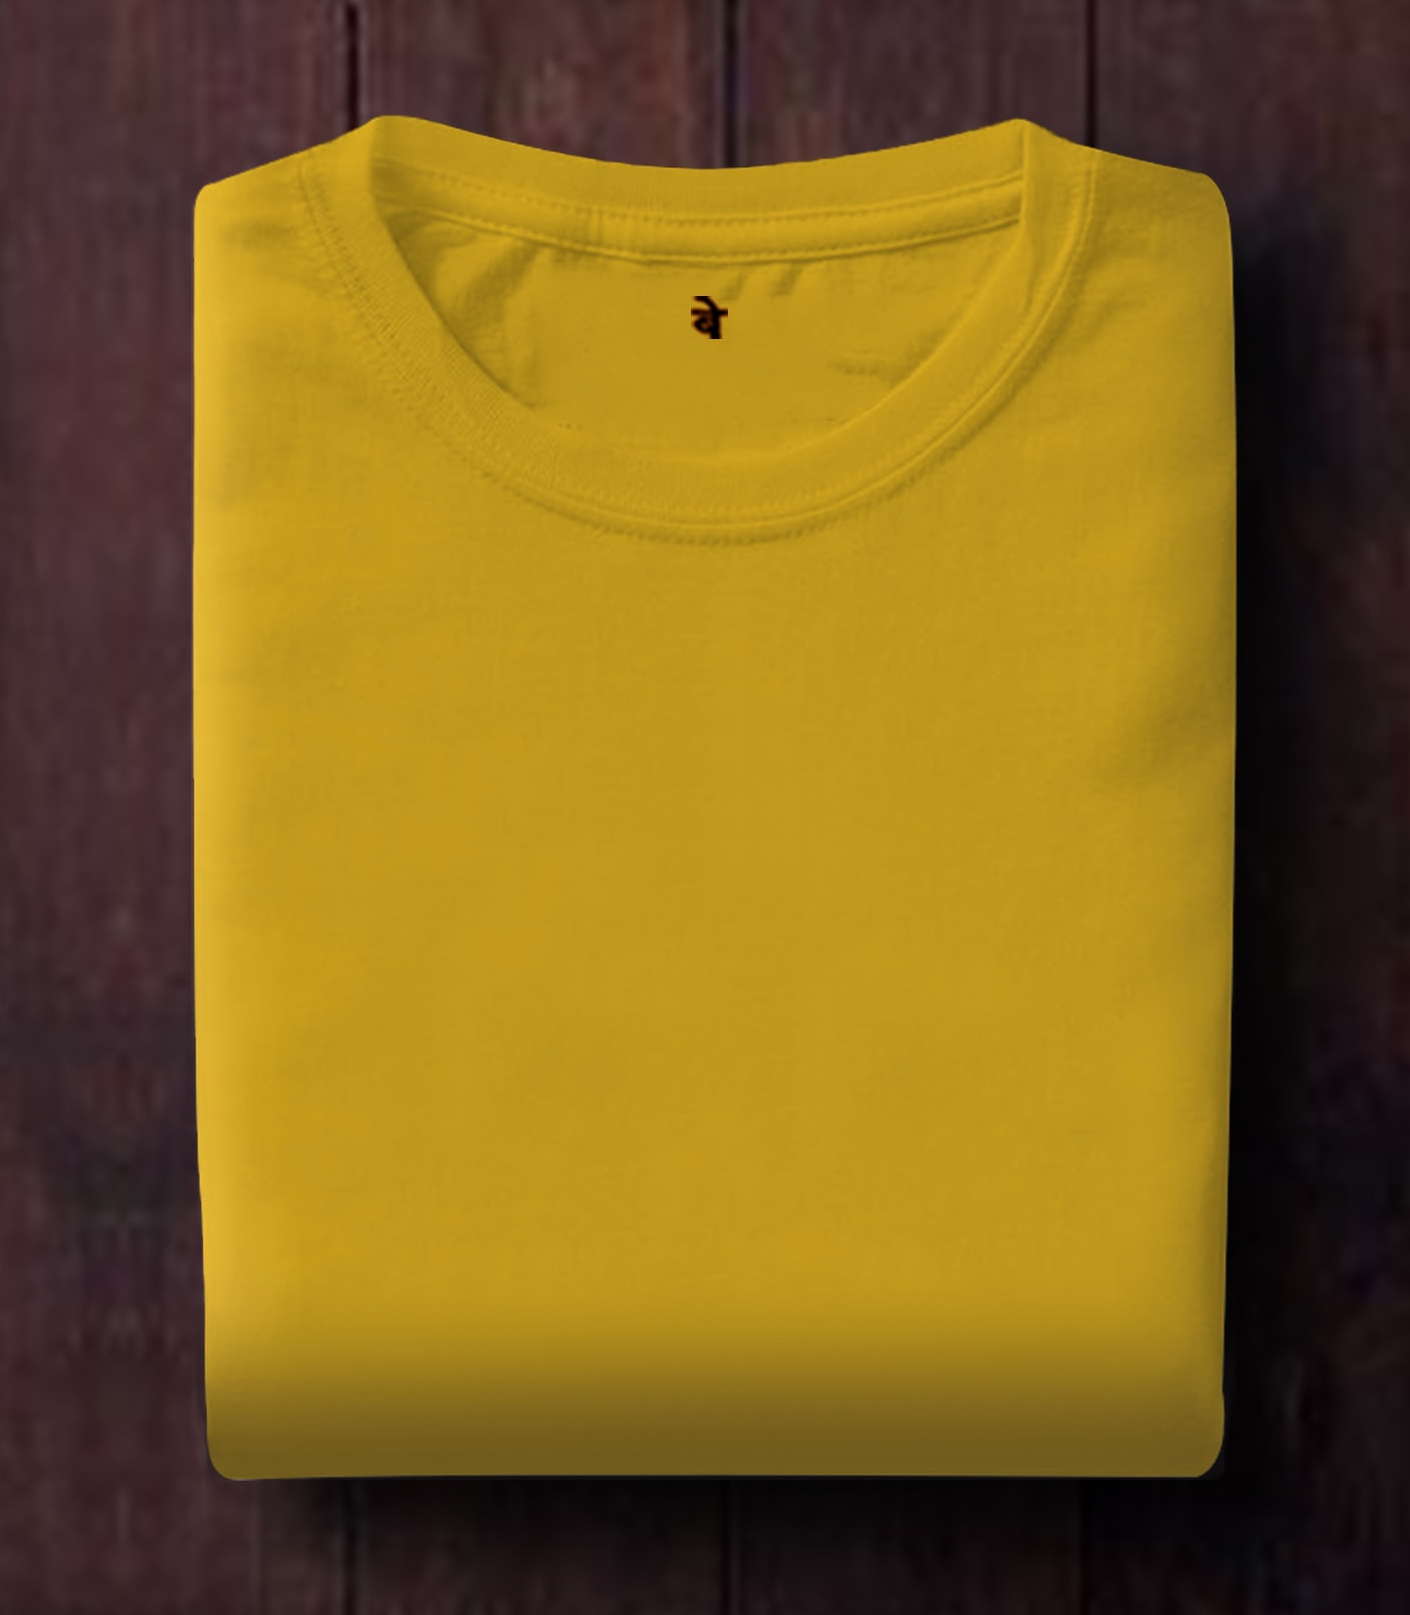 » Yellow Basic Tshirt (50% off)